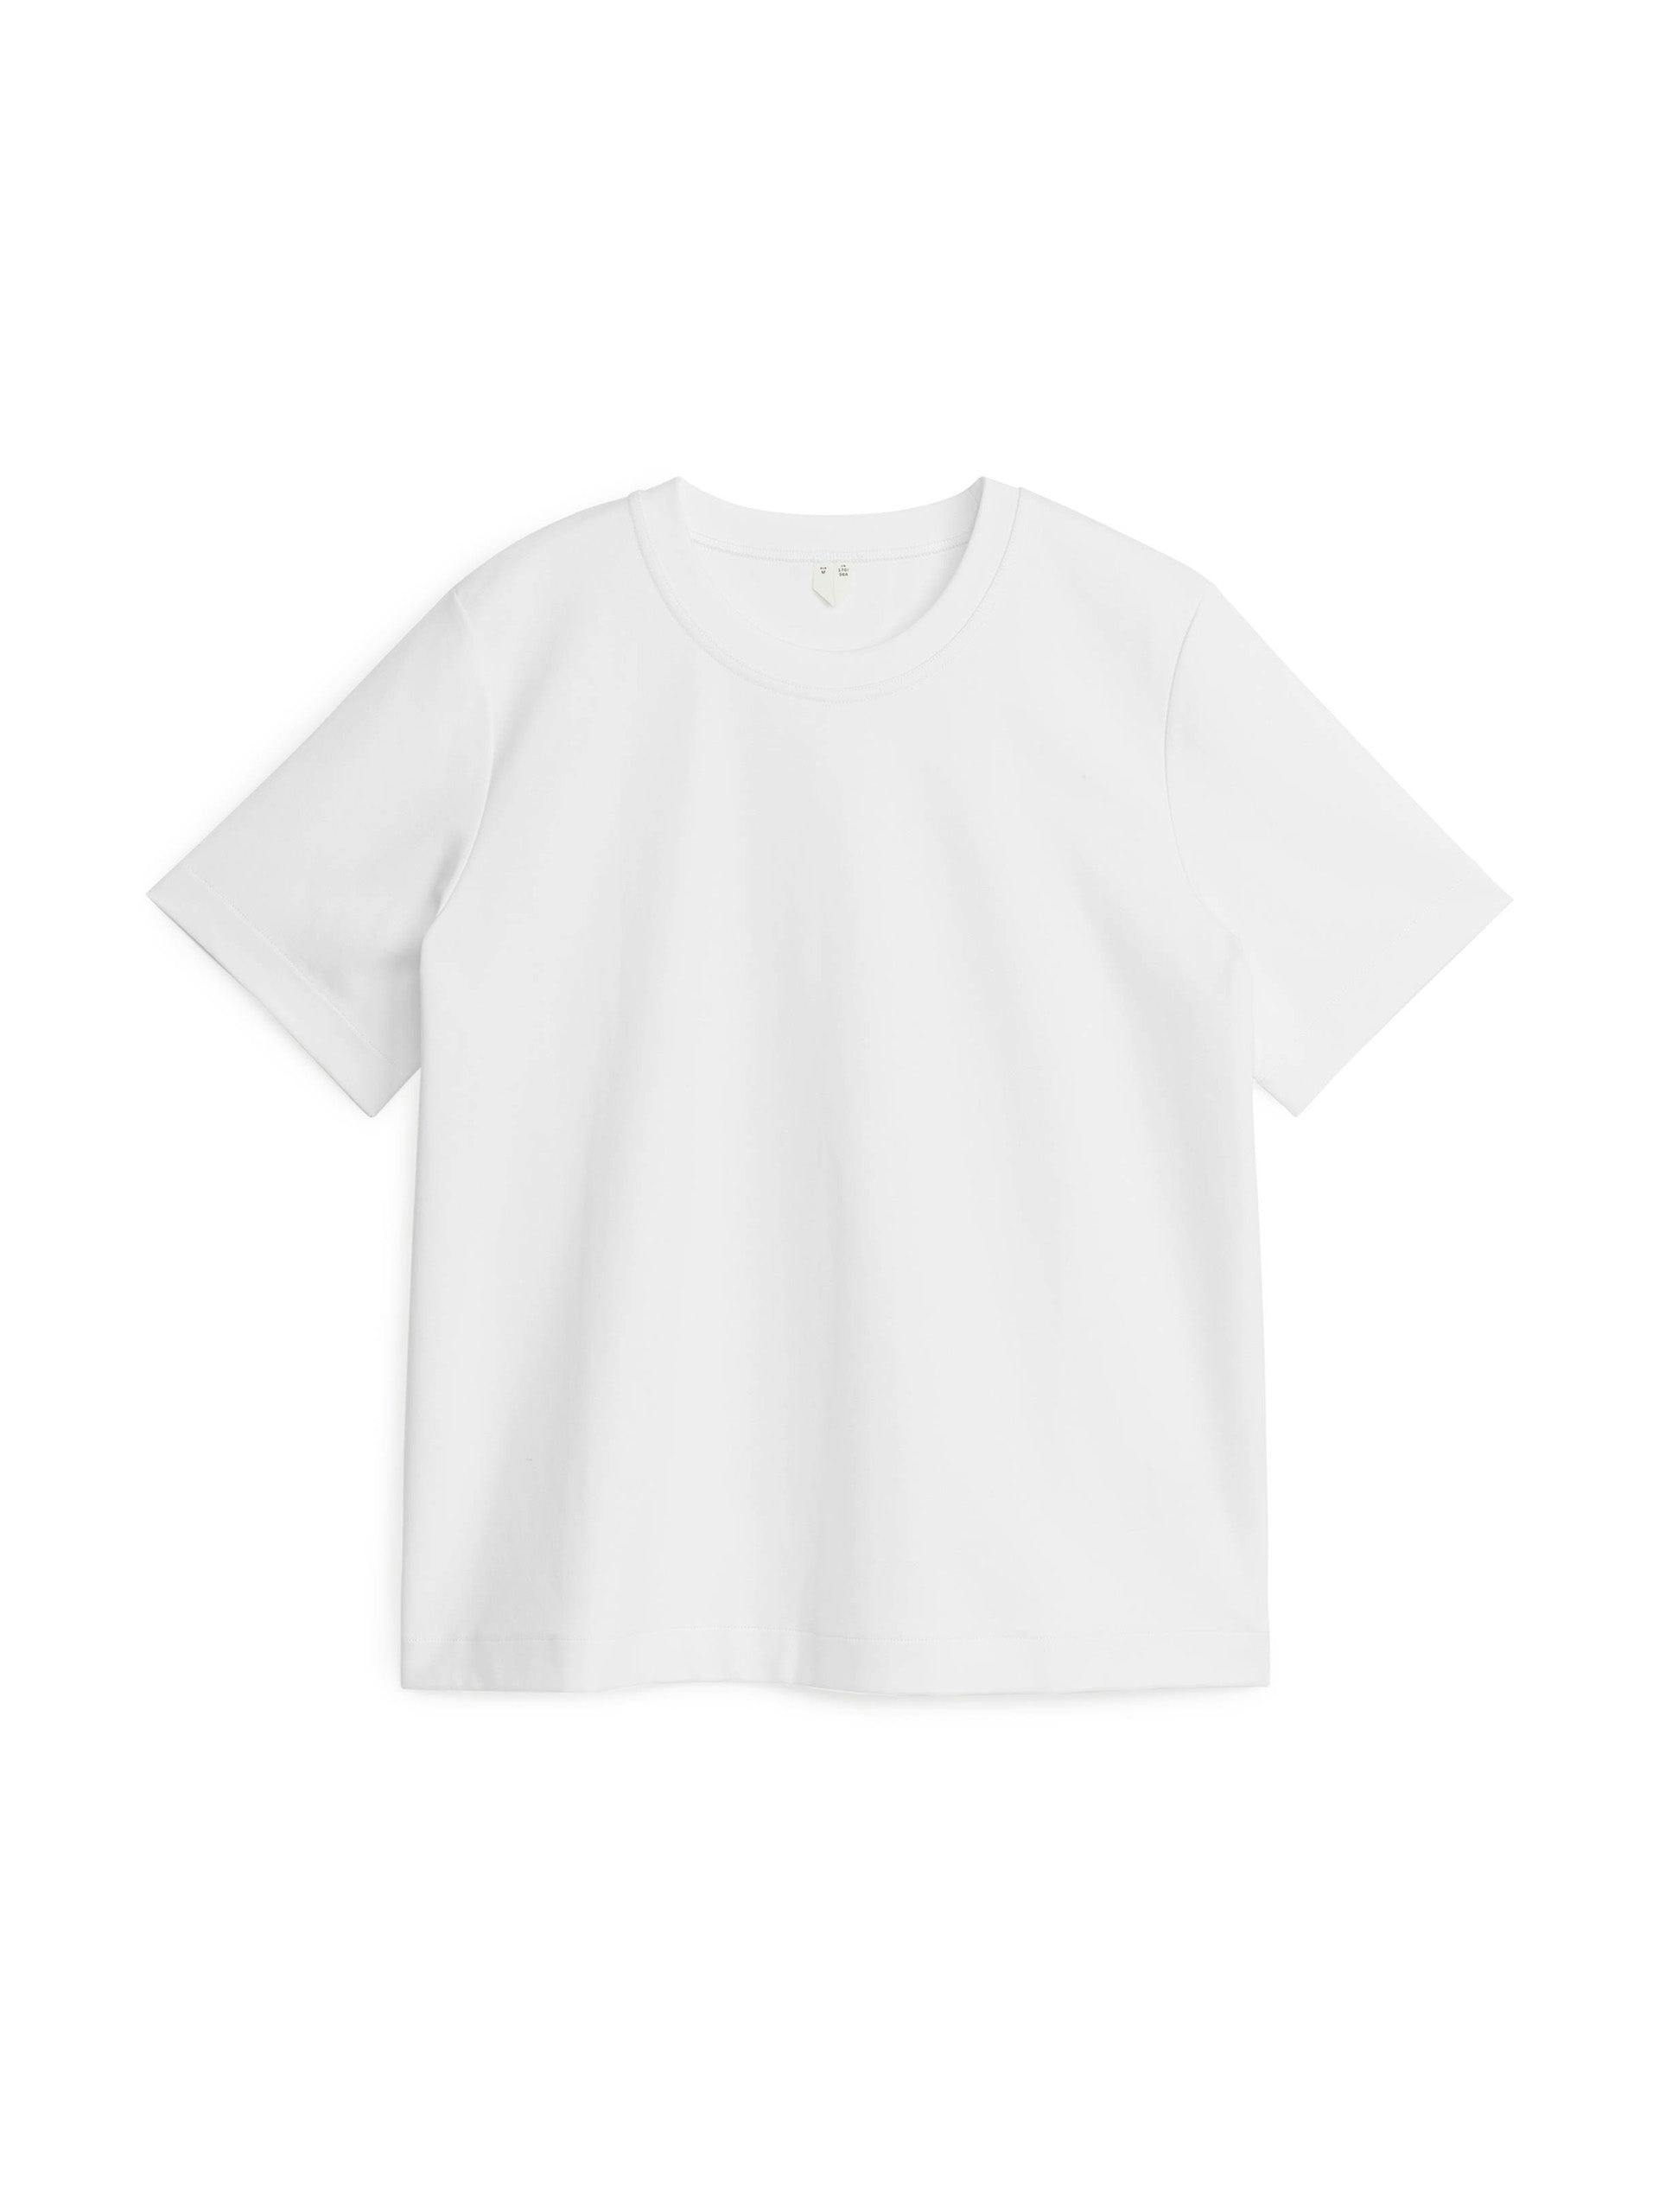 White crewneck t-shirt